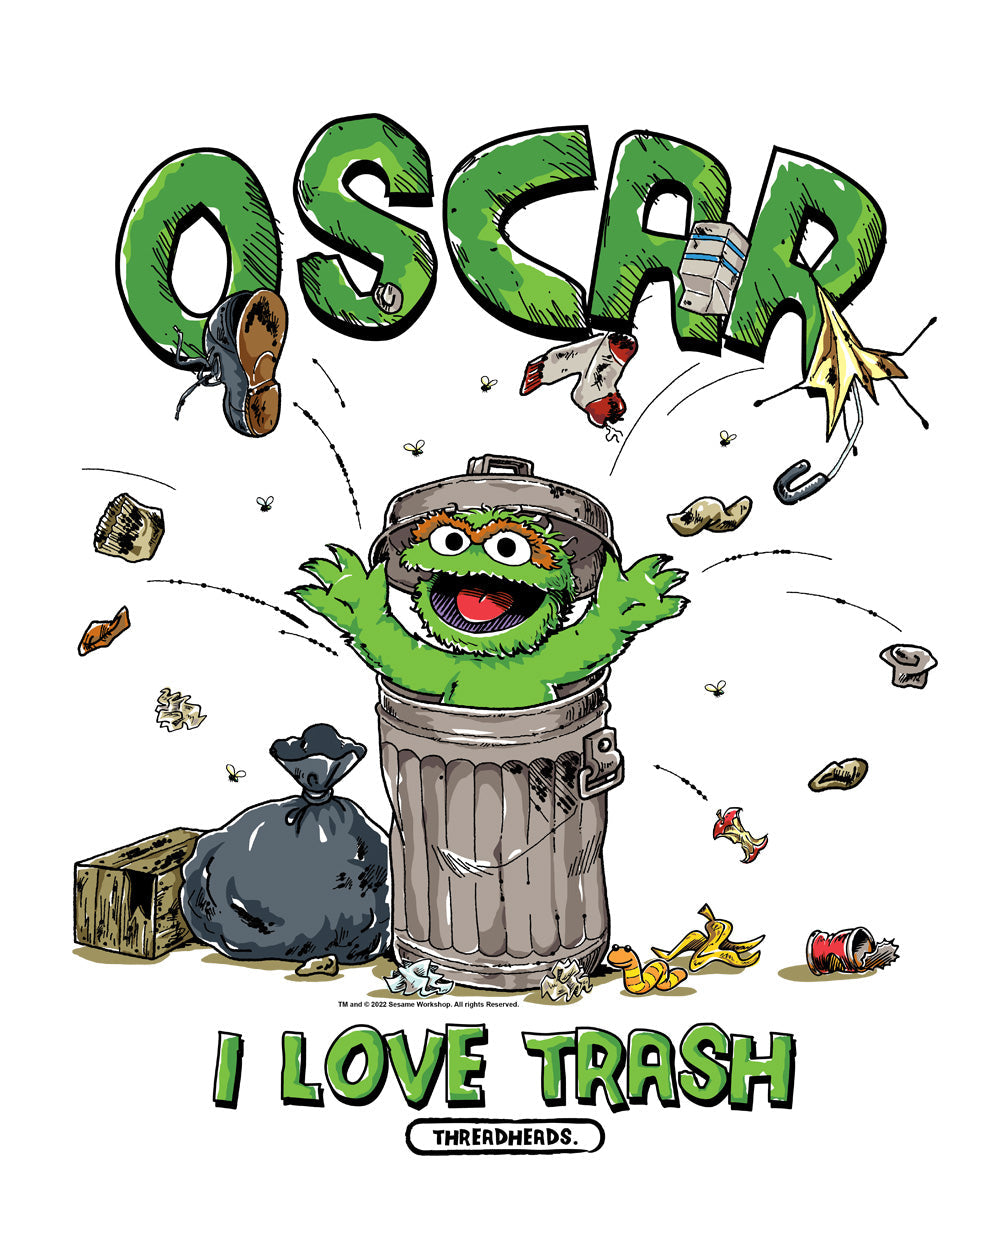 Sesame Street Oscar I Love Trash Classic Retro Vintage Educational Puppet TV Program Officially Licensed T-Shirt